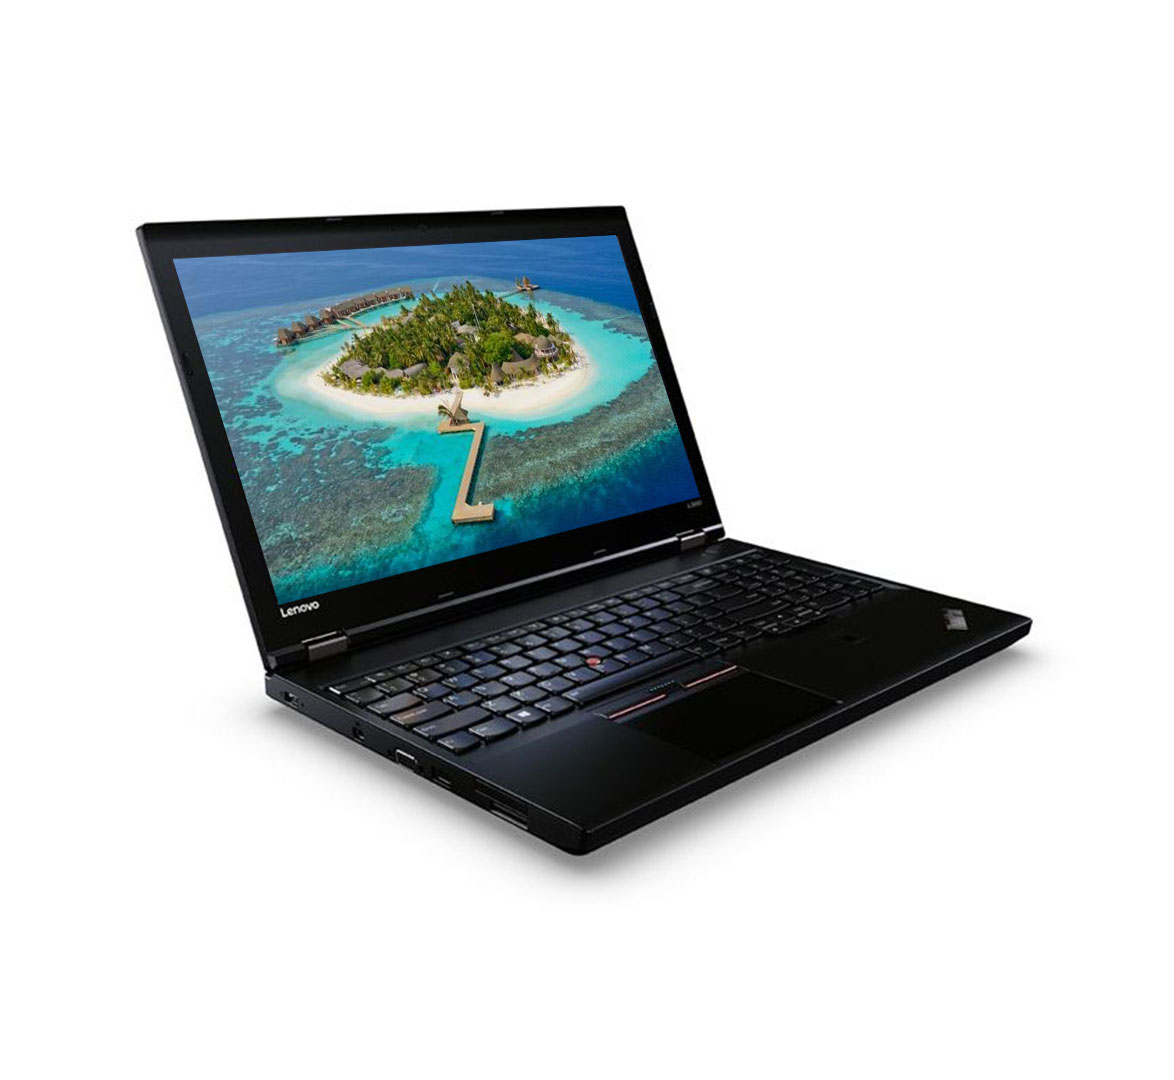 Lenovo ThinkPad L560 Business Laptop, Intel Core i5-6th Generation CPU, 8GB RAM, 256GB SSD, 15 inch Display, Windows 10 Pro